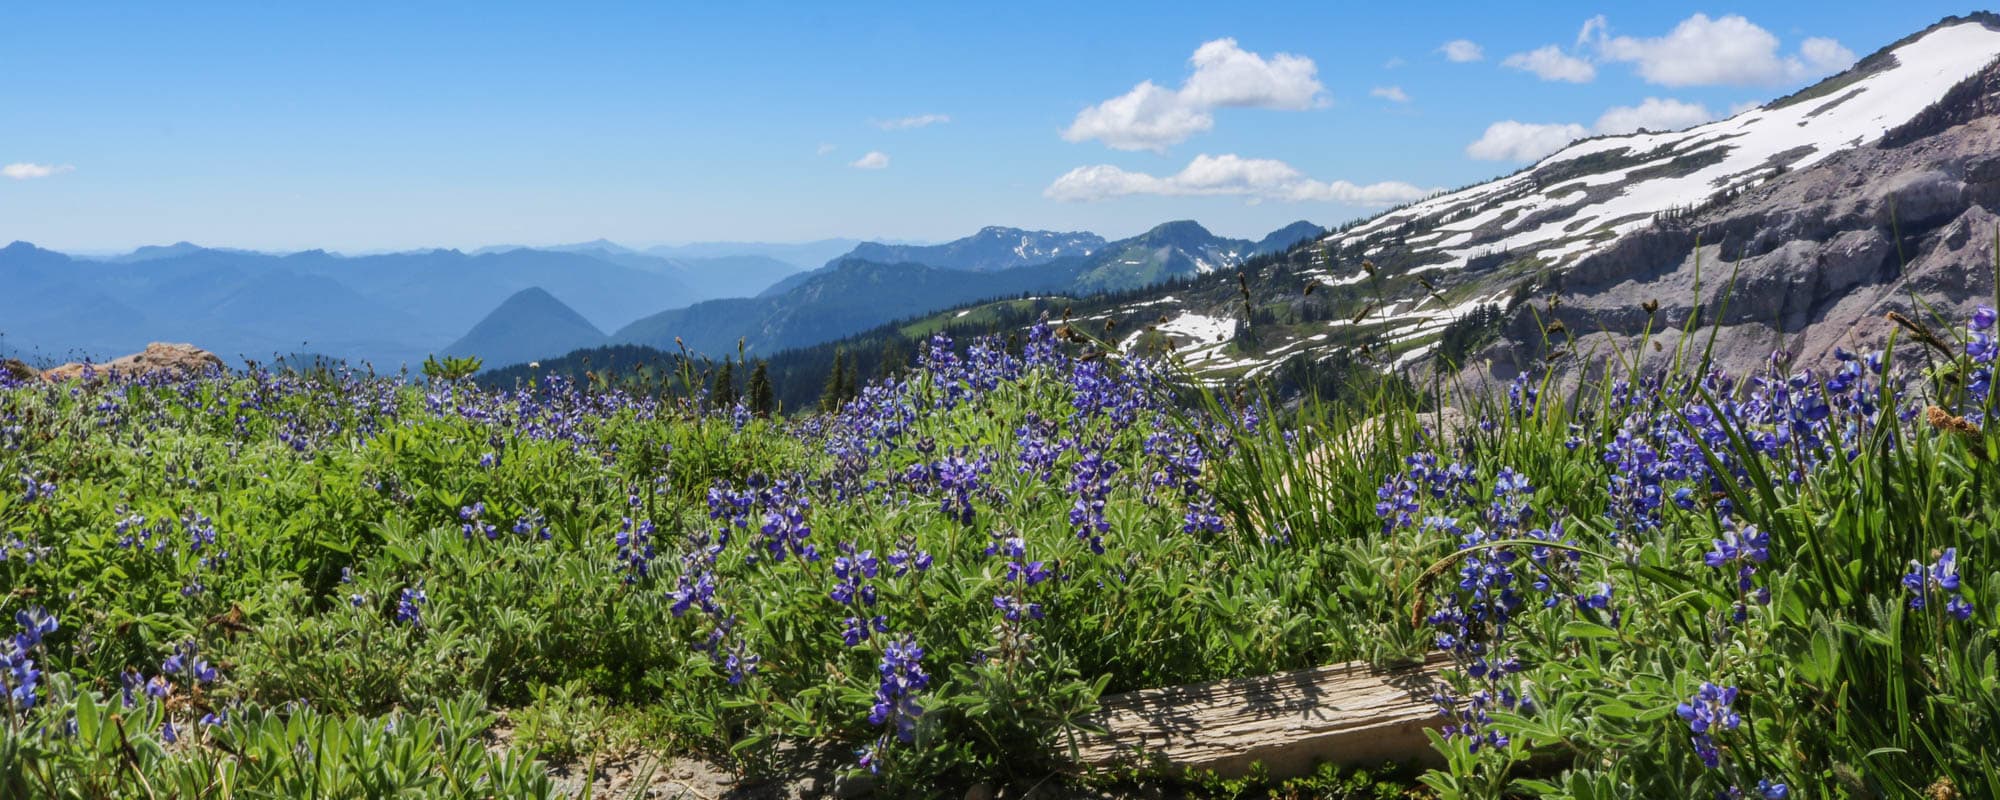 Mount Rainier National Park Washington - Banner Wildflowers